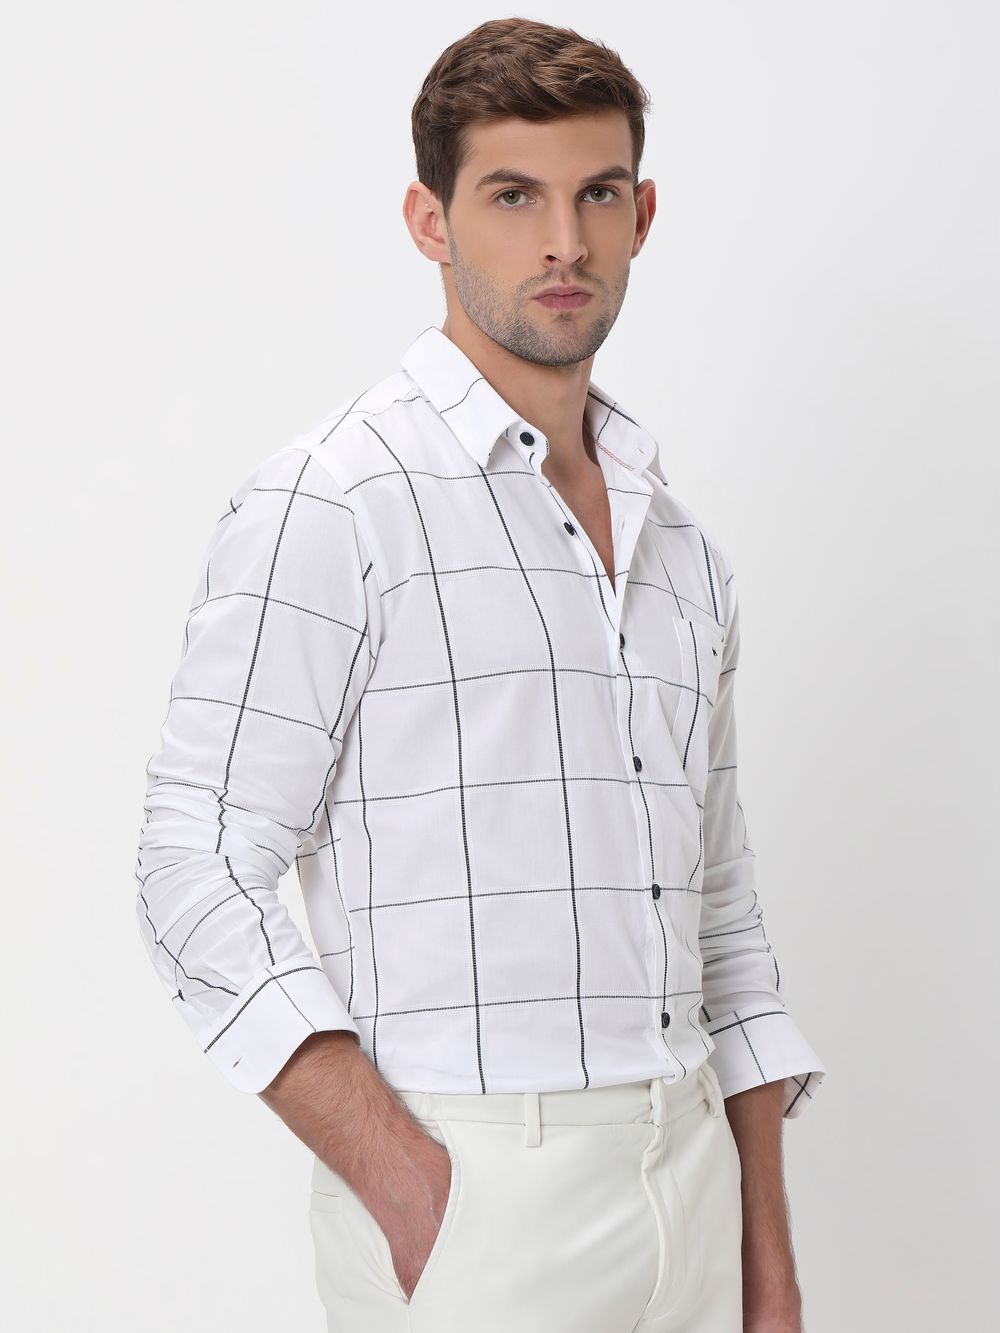 White Windowpane Check Slim Fit Casual Shirt